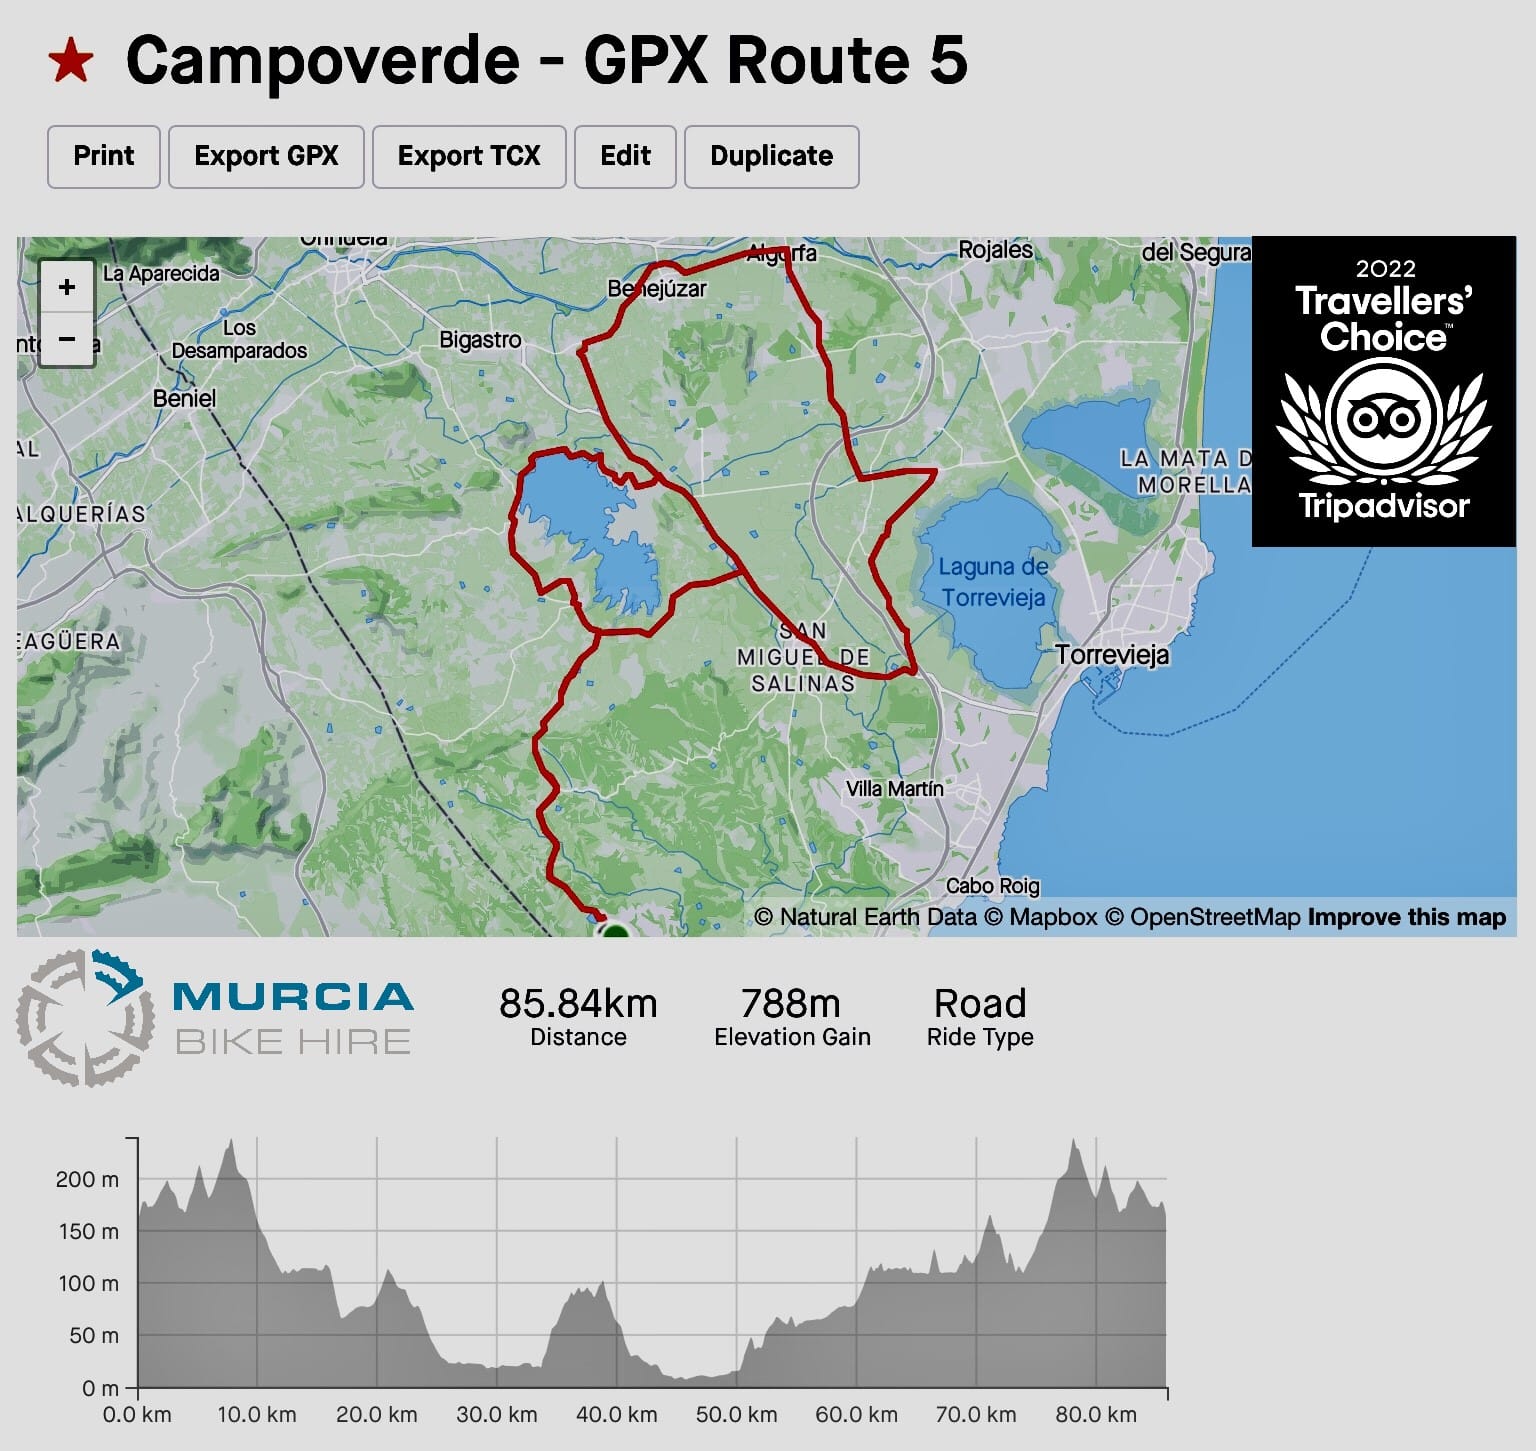 Campoverde - GPX Route 5